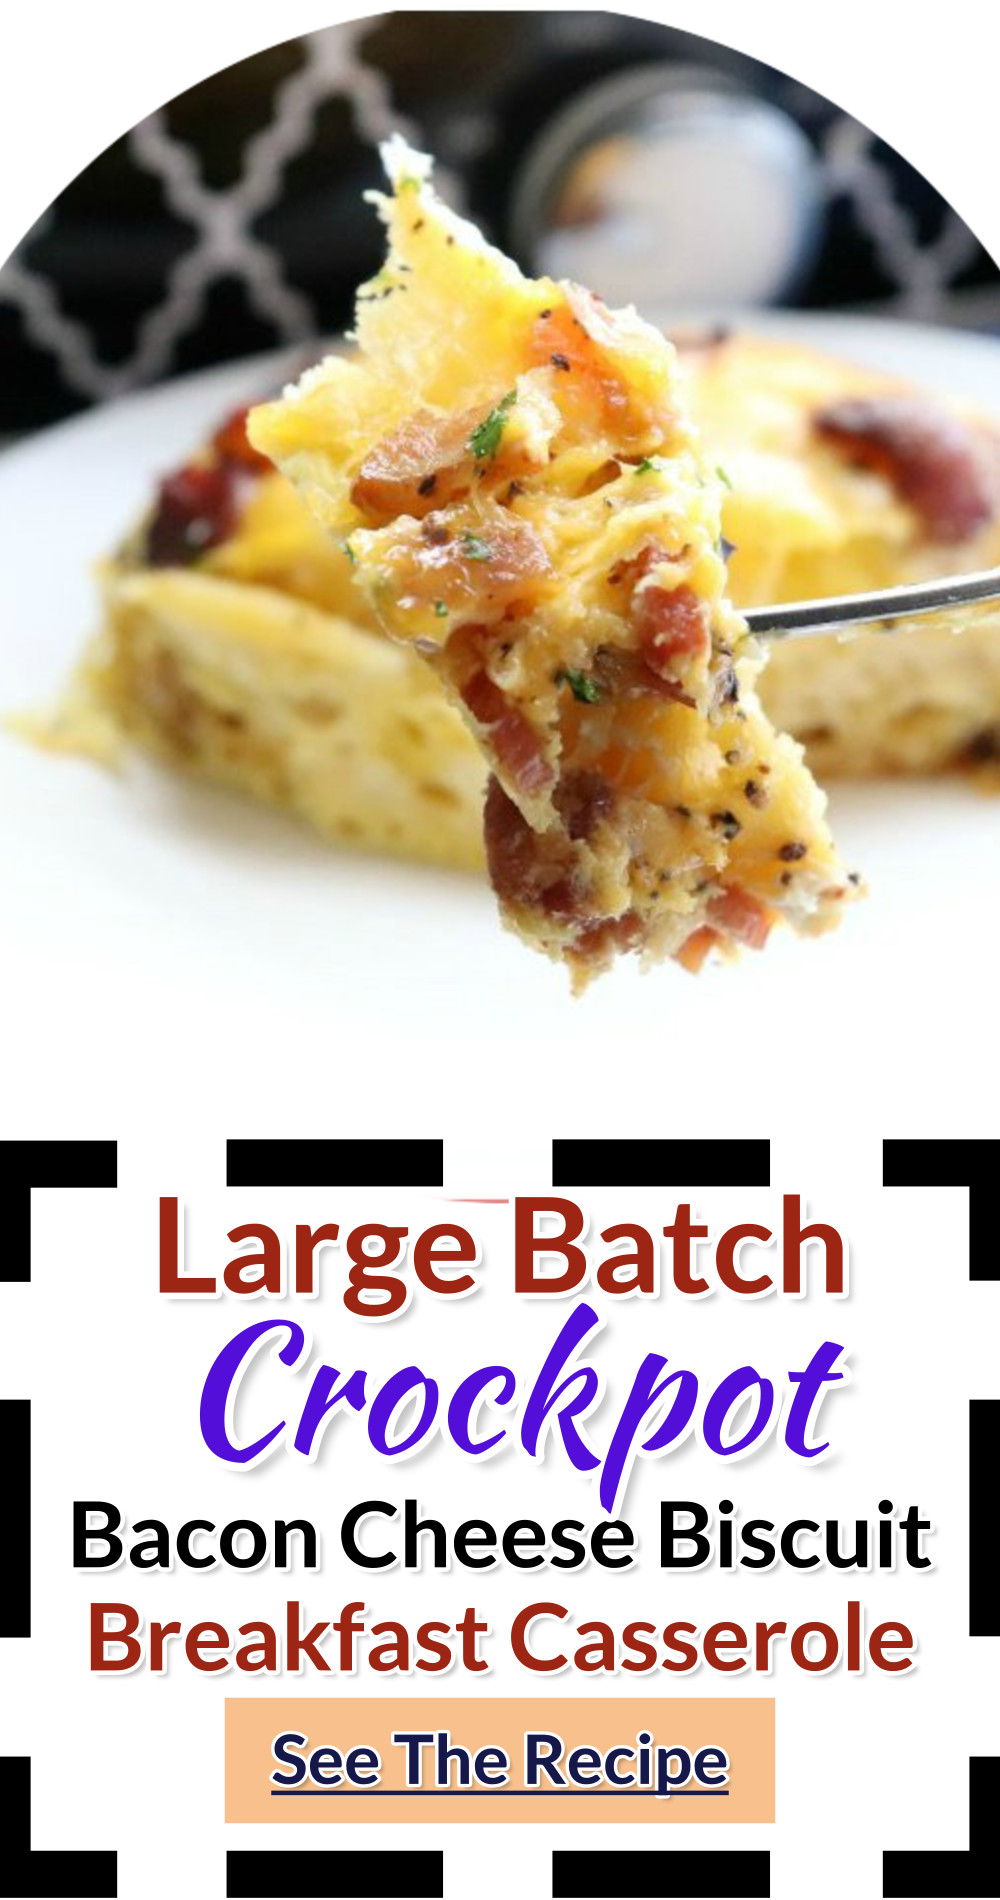 large batch crockpot bacon cheese biscuit breakfast casserole recipe